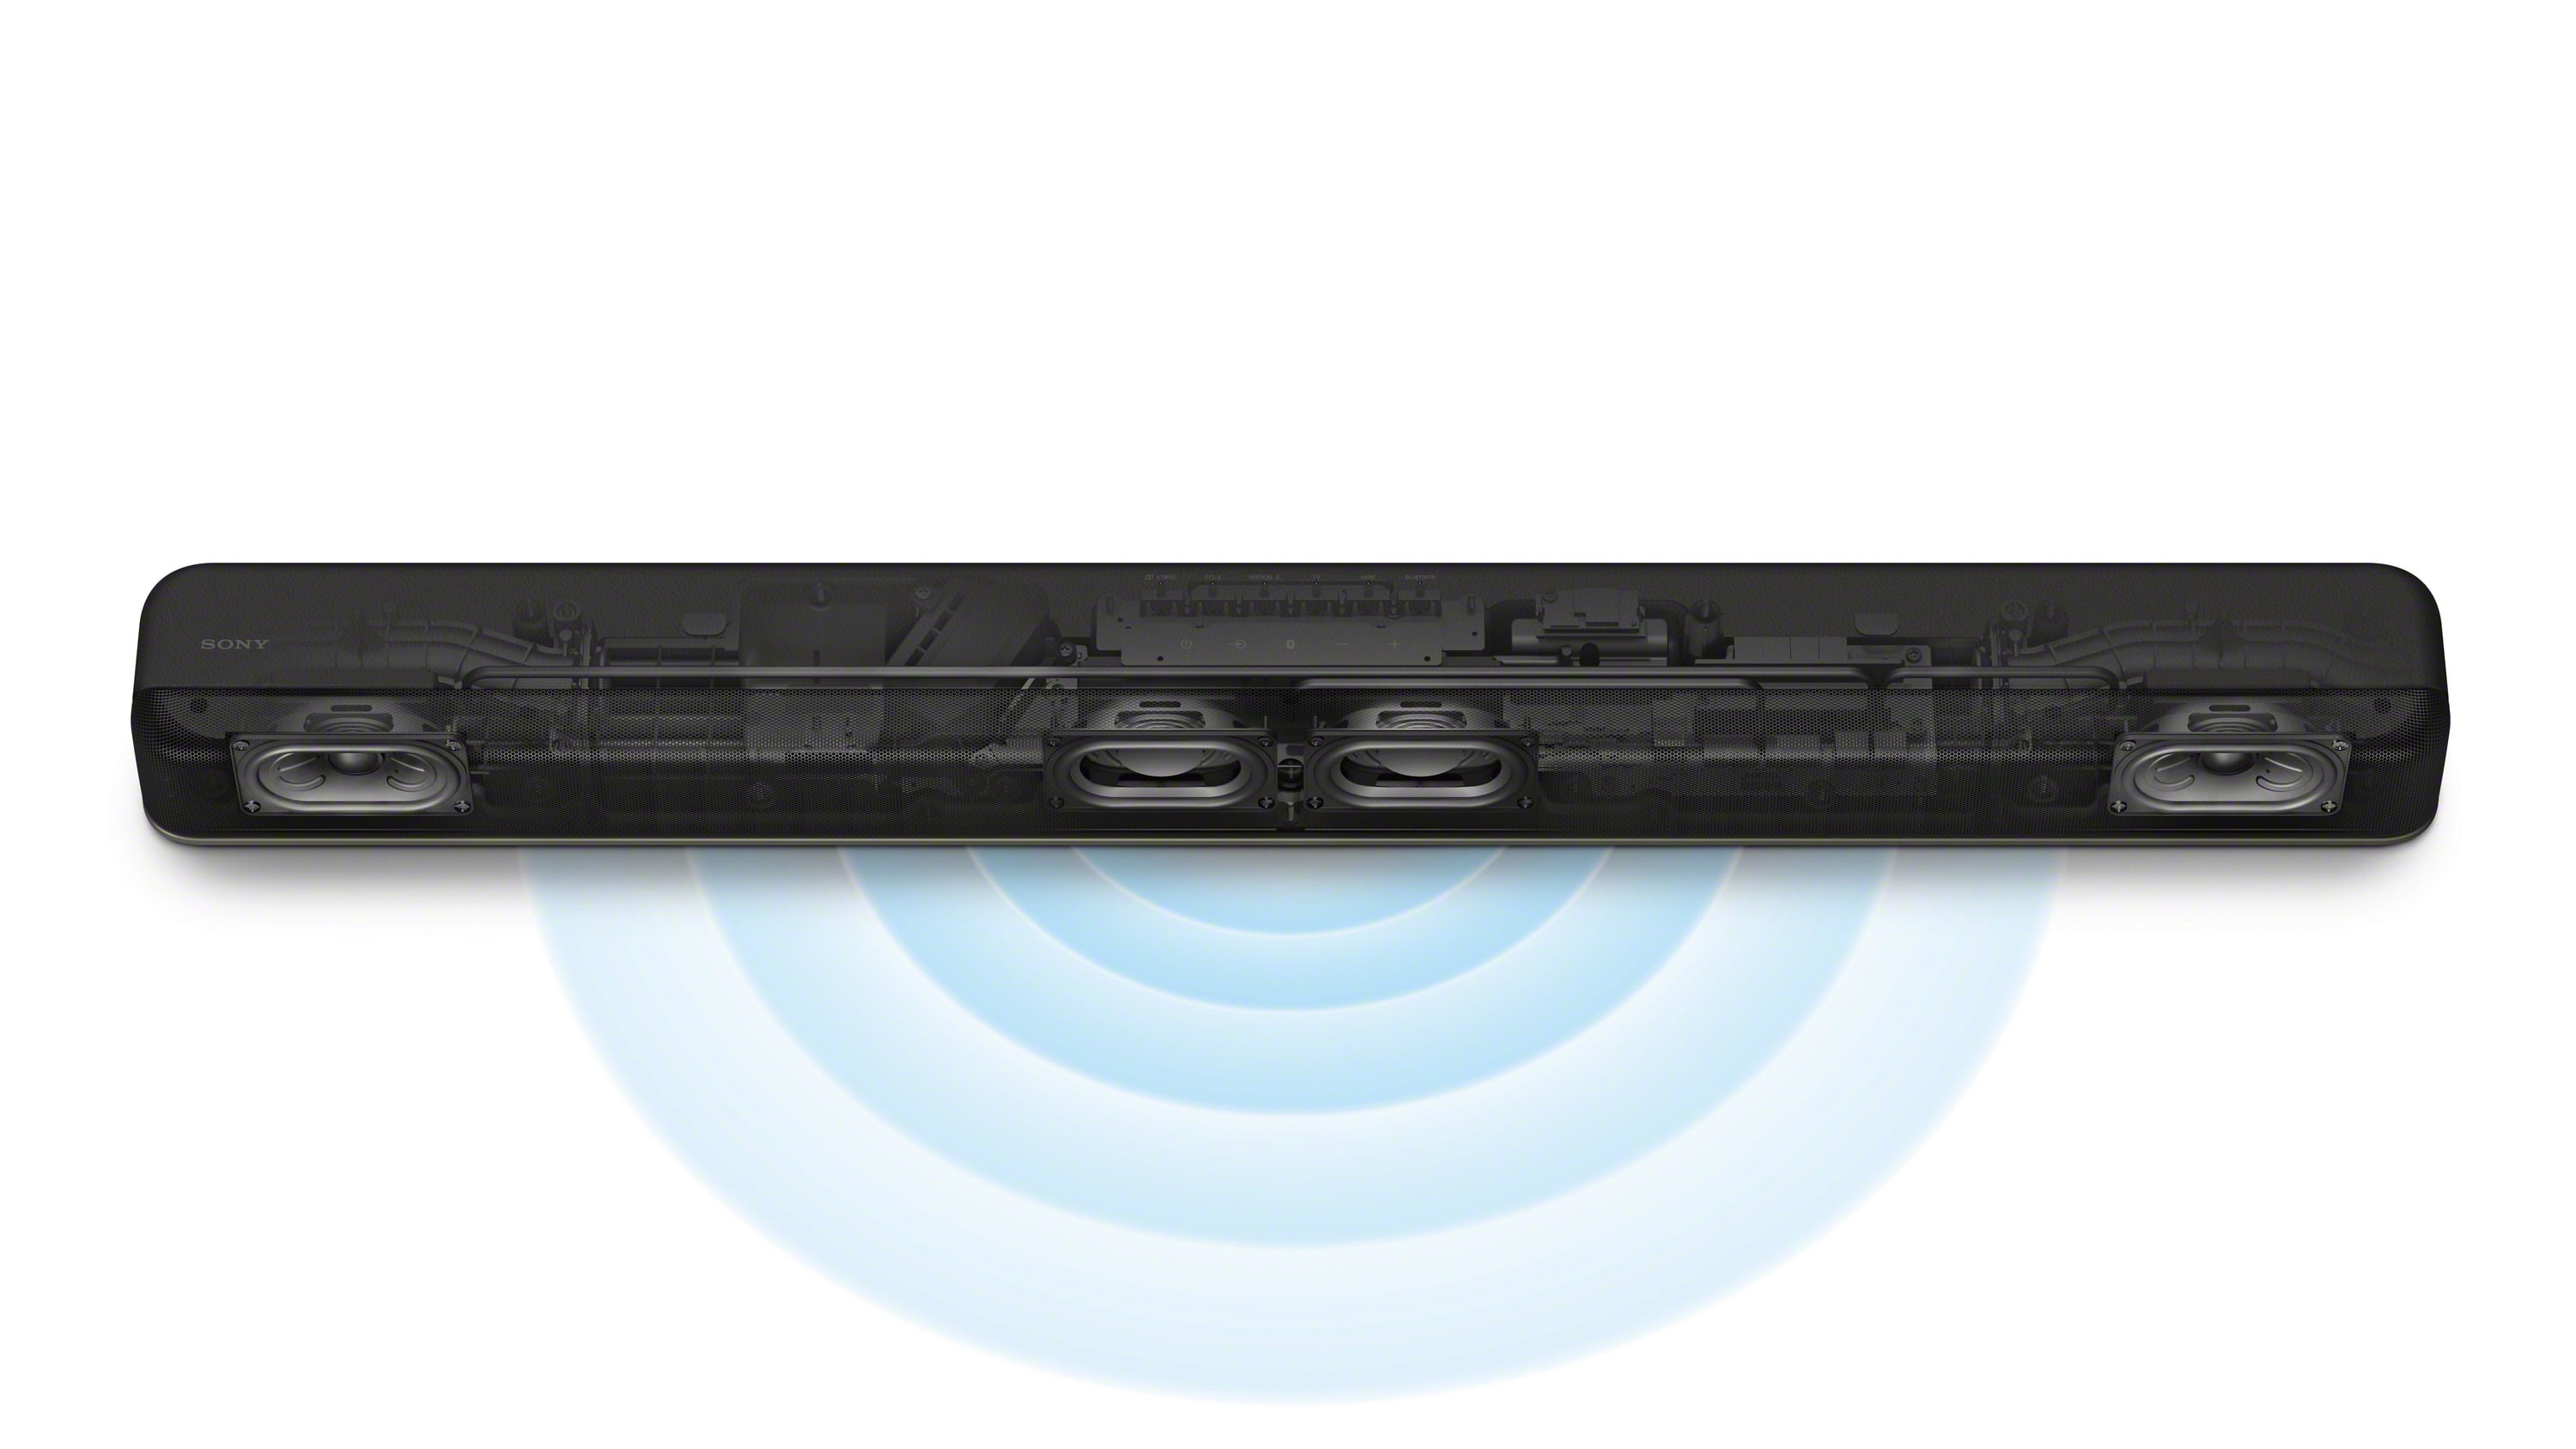 Sony HT-X8500 2.1ch Dolby Atmos®/DTS:X® Soundbar with Built-in 